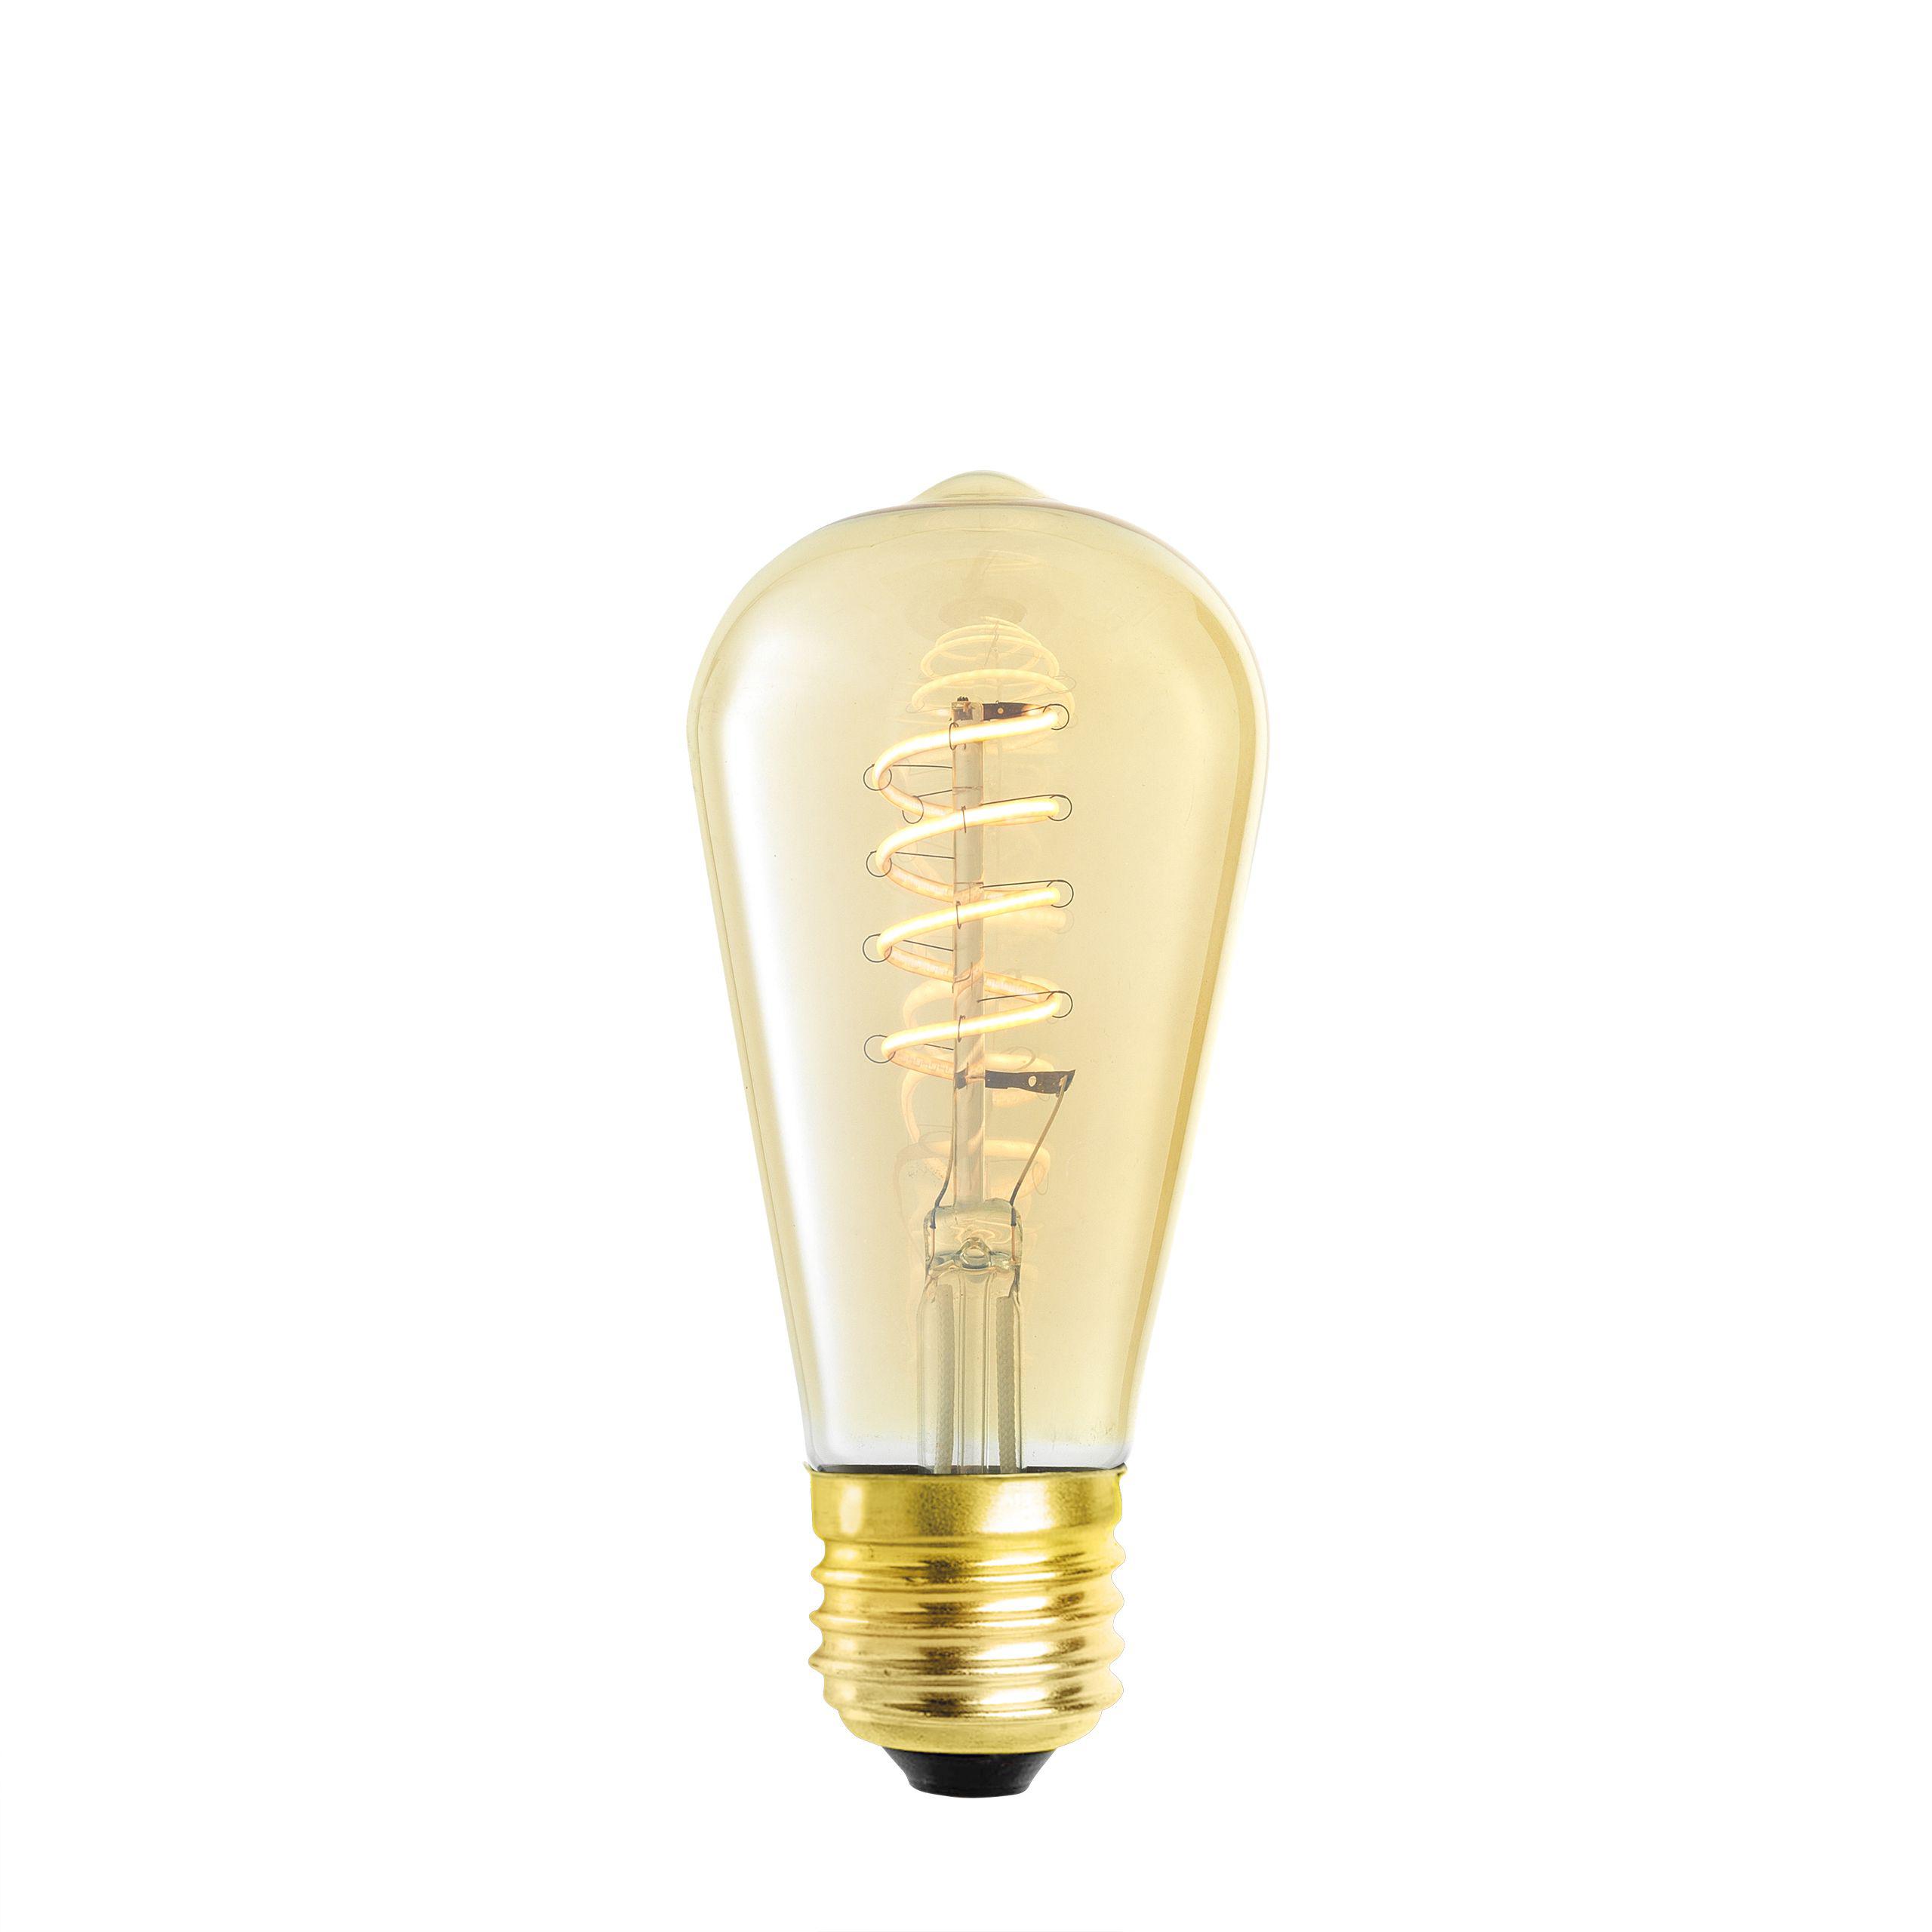 Купить Лампочка LED Bulb Signature 4W E27 set of 4 в интернет-магазине roooms.ru